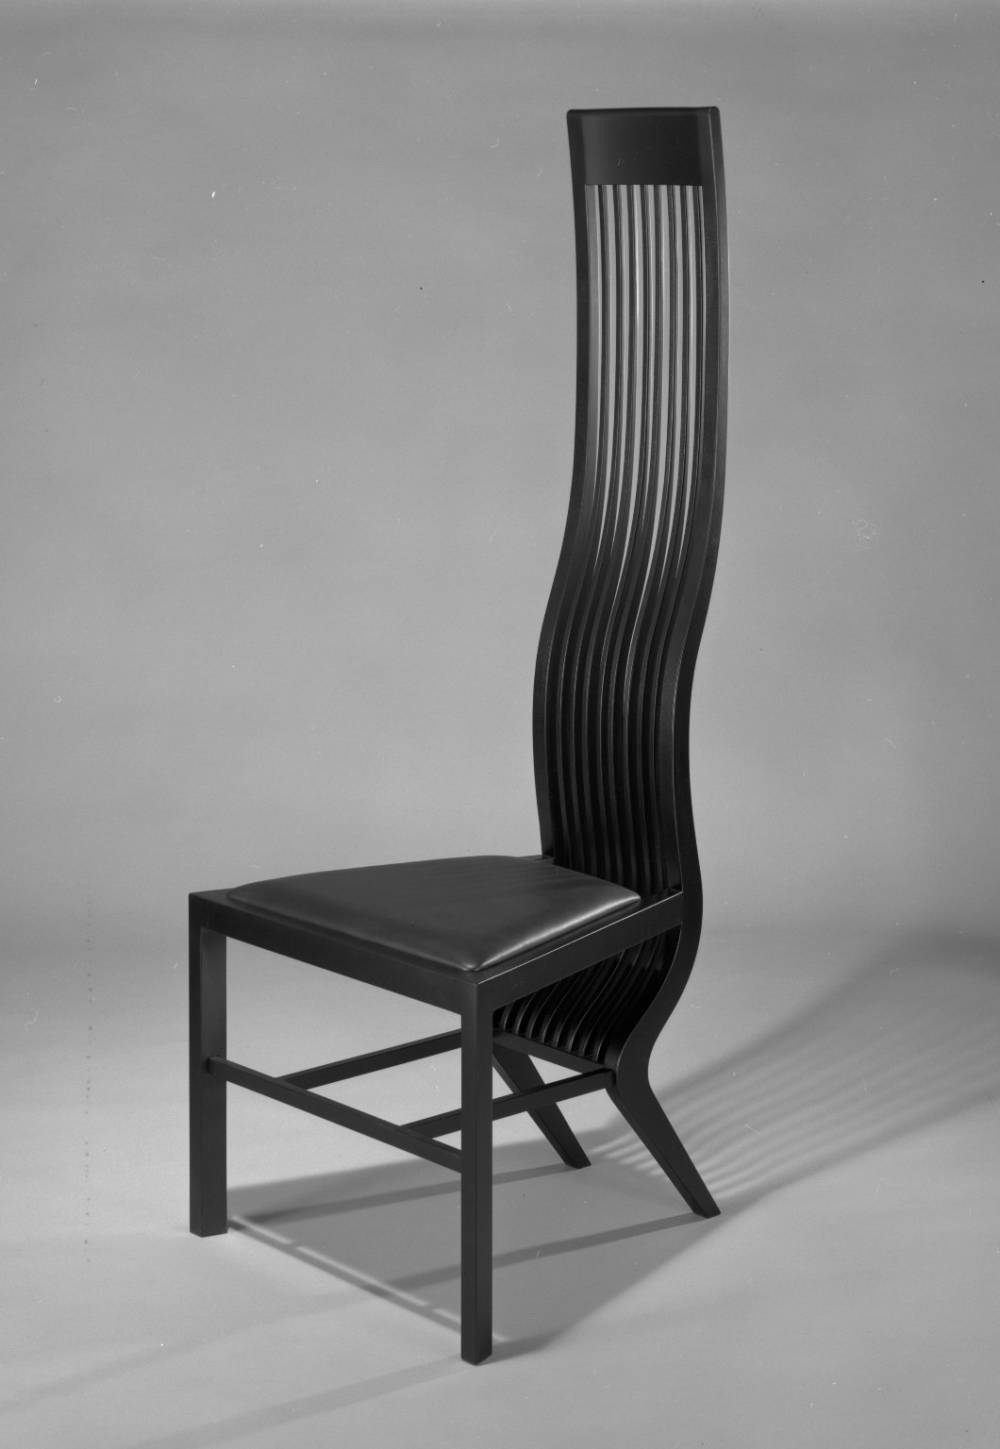  Arata Isozaki, The Marilyn Chair, 1983 